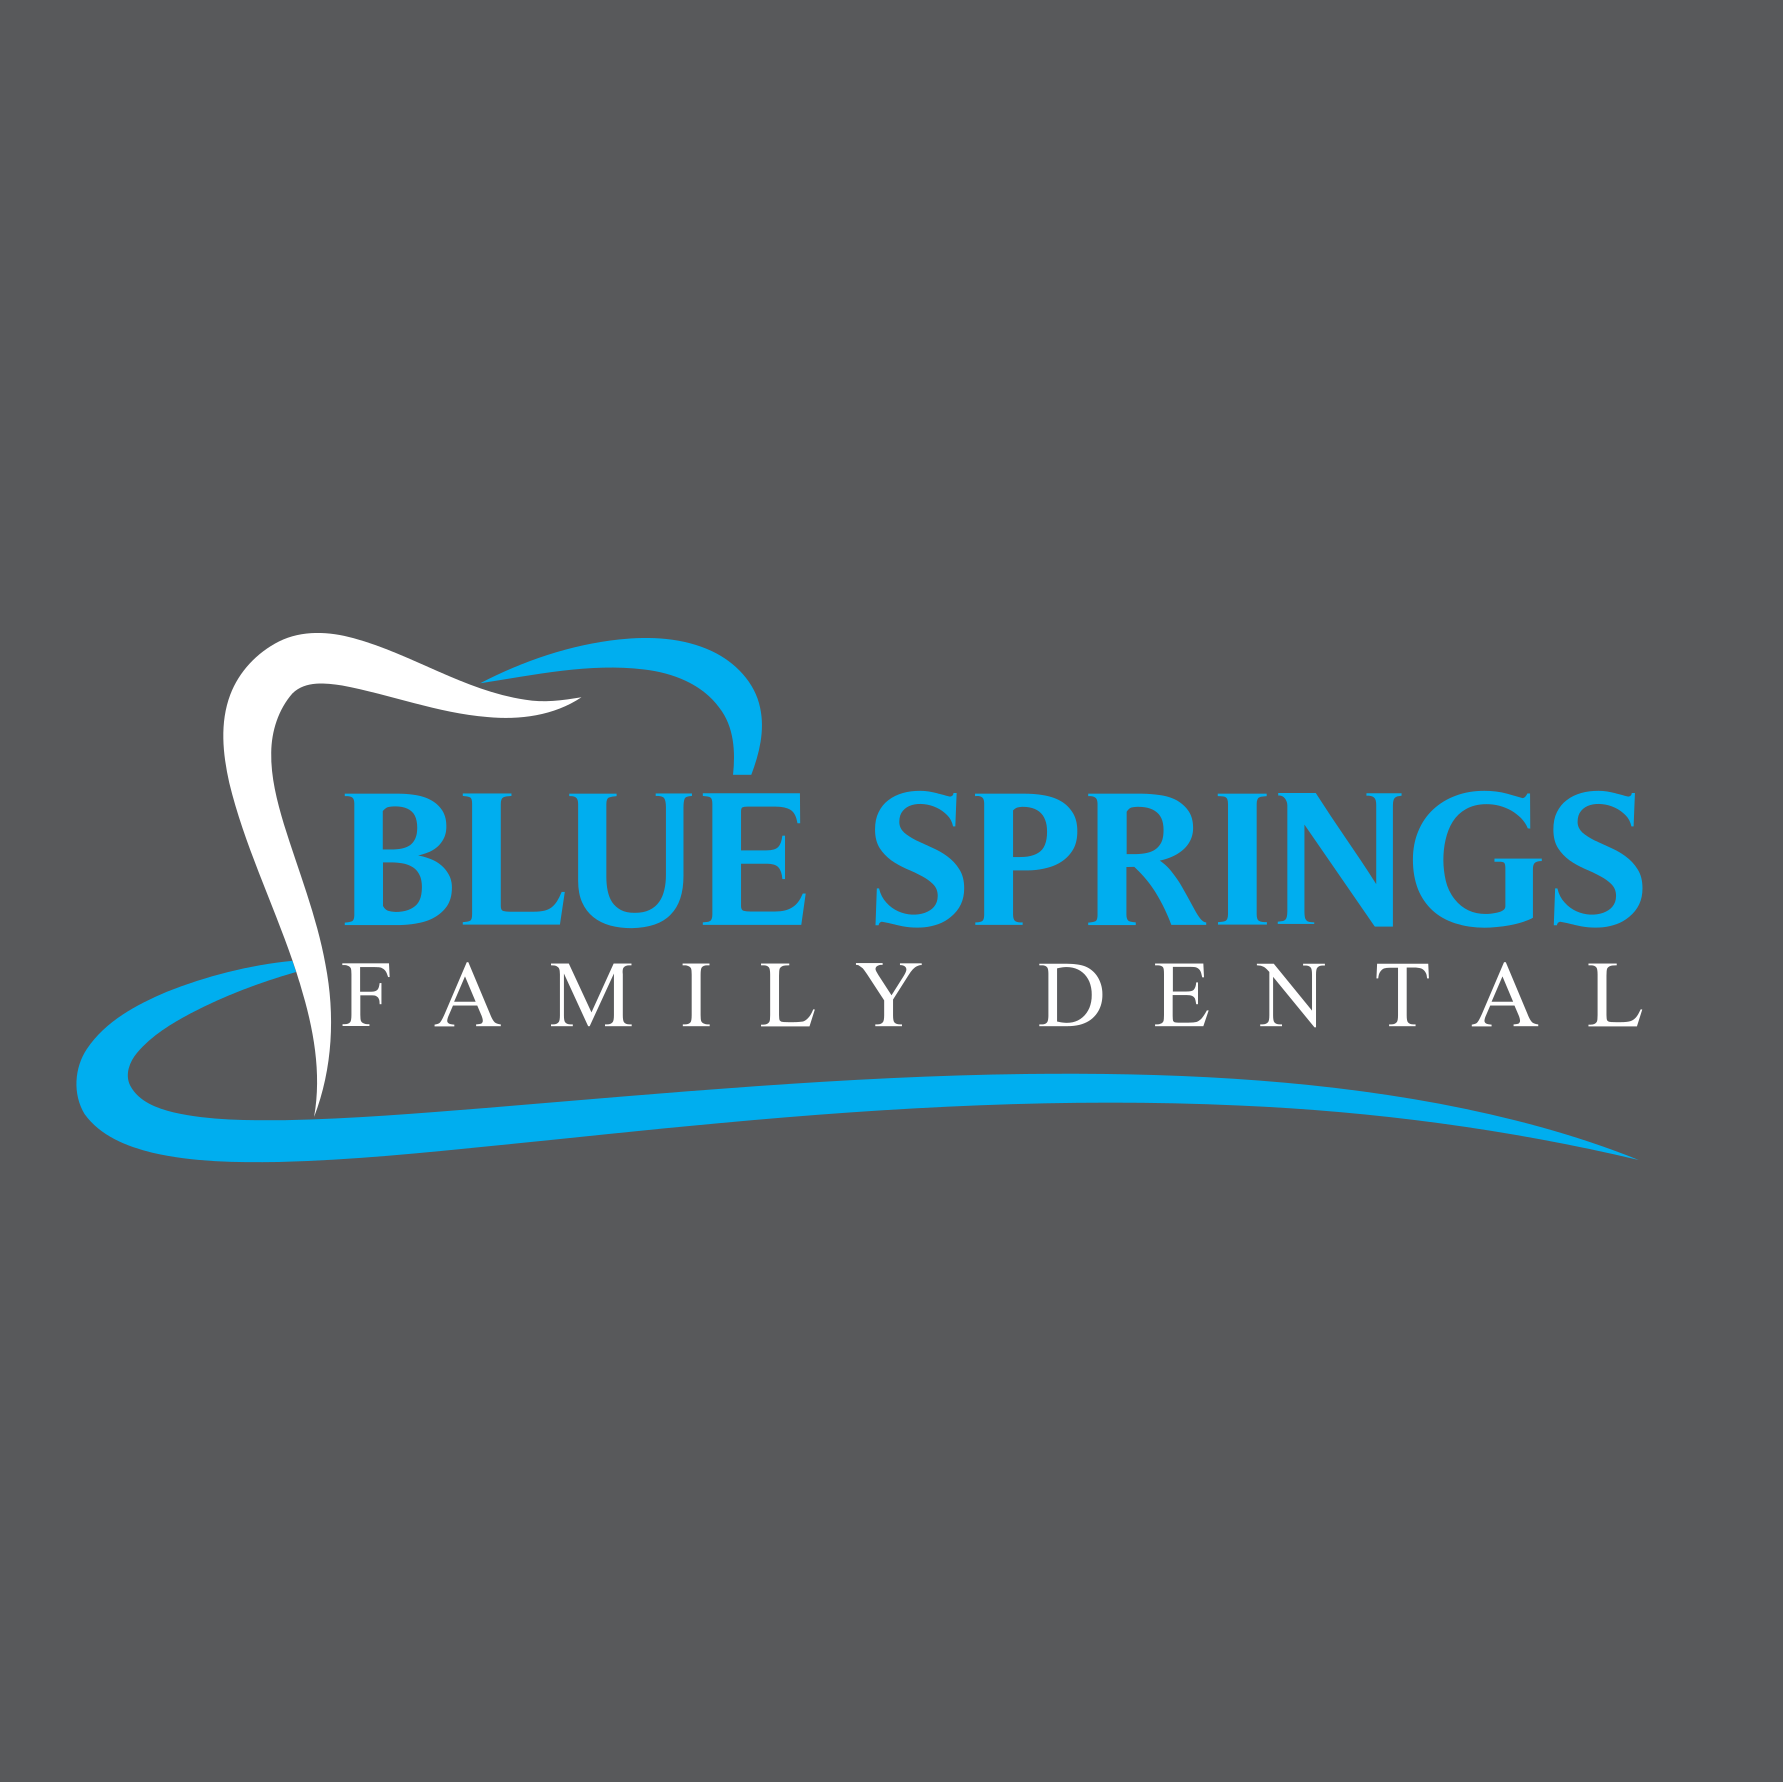 Company logo of Blue Springs Family Dental